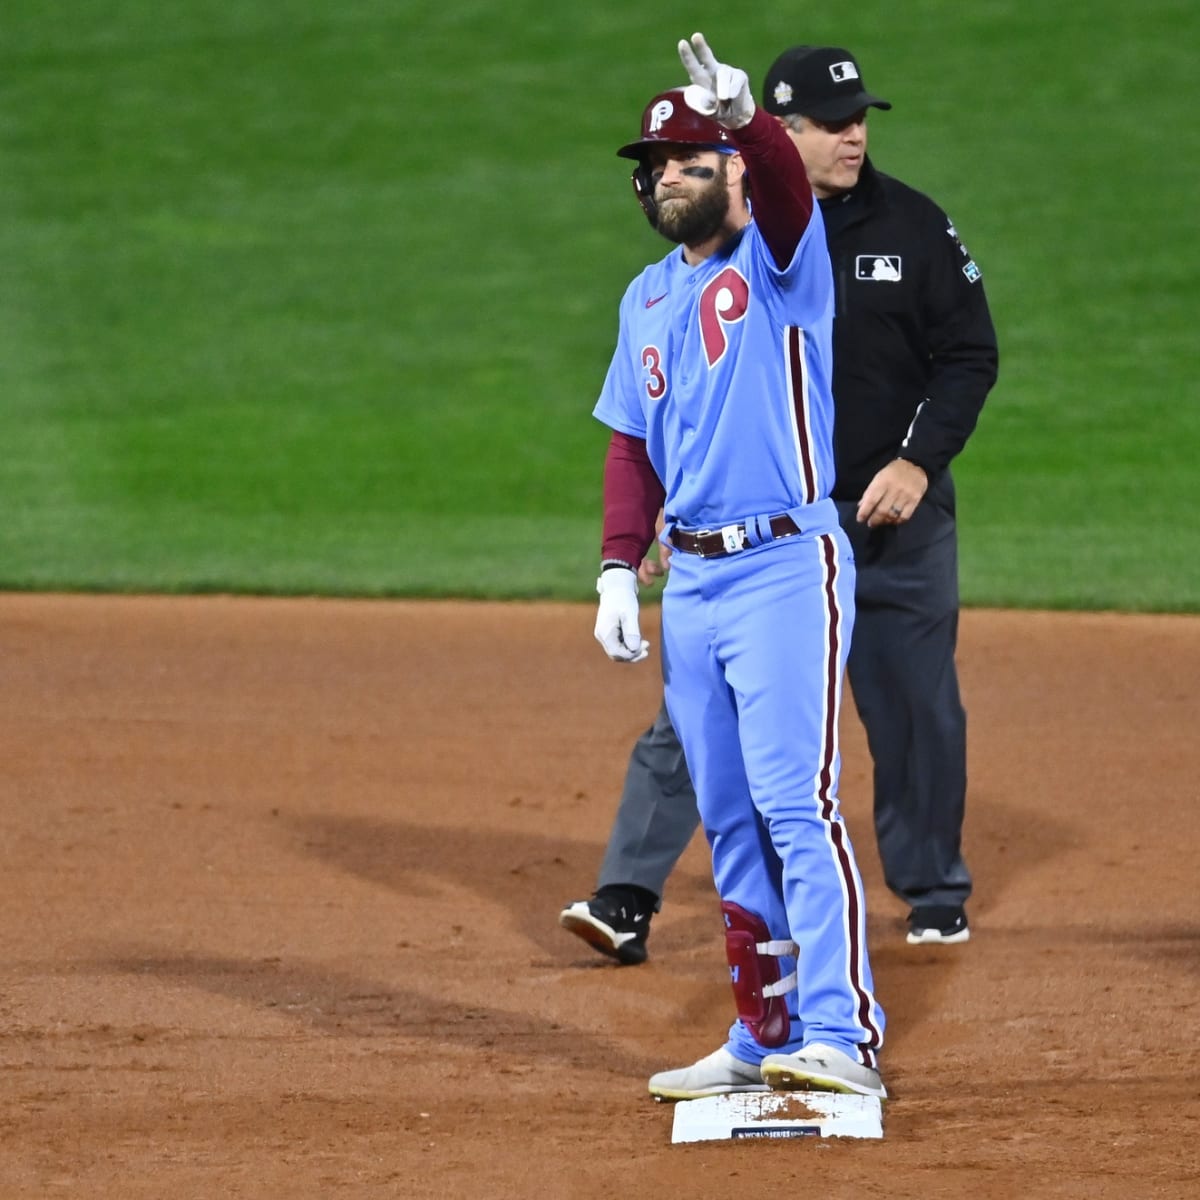 PHOTOS: Bryce Harper in a Phillies uniform